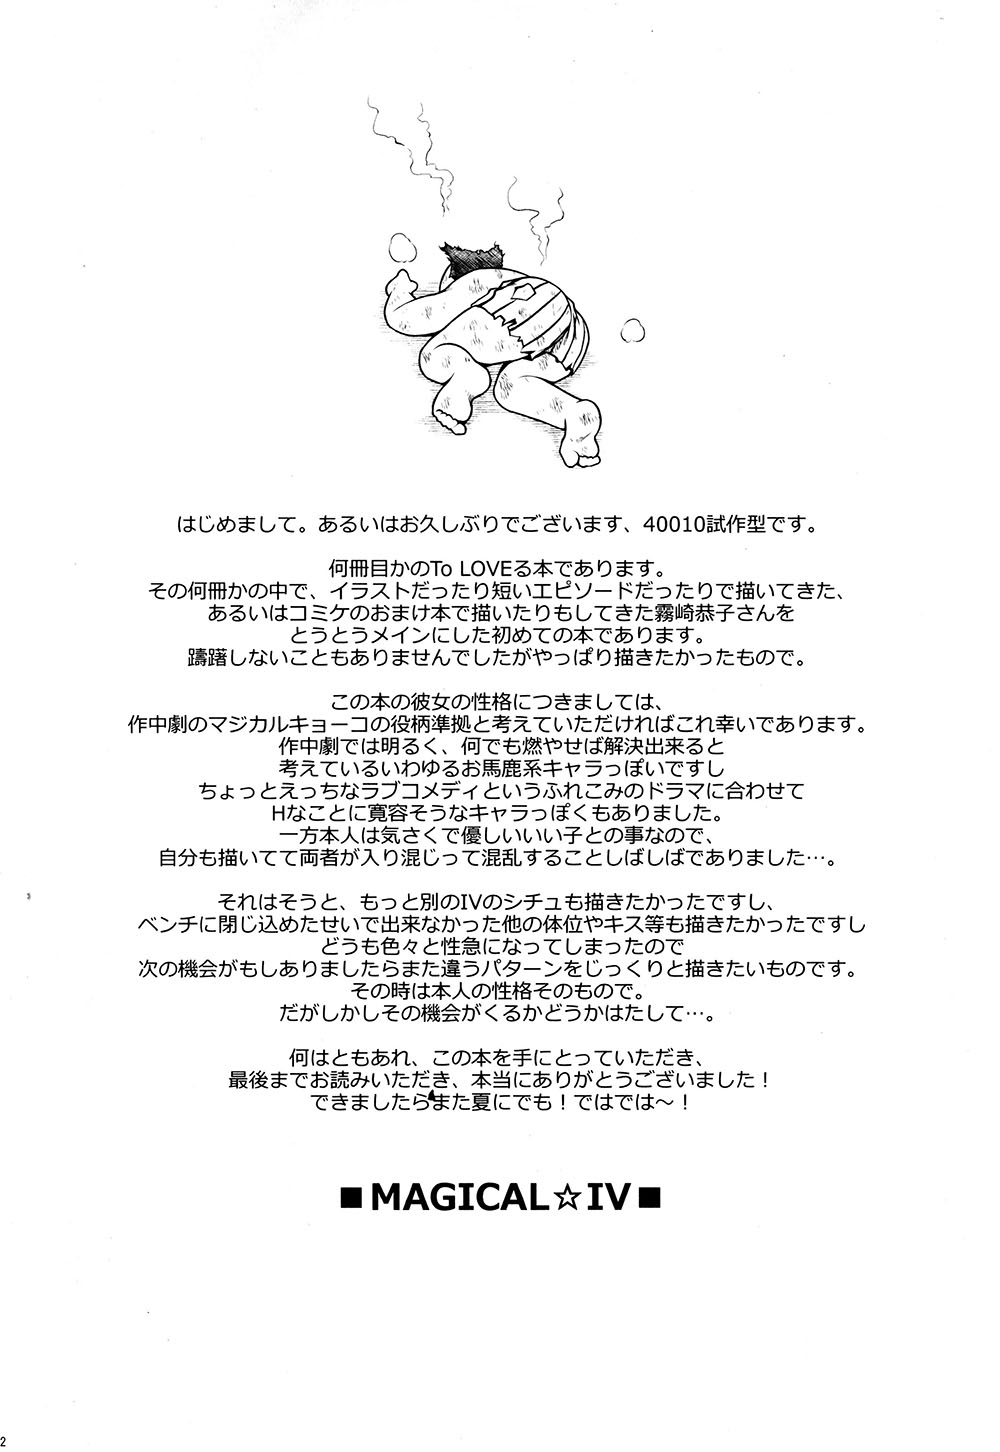 MAGICAL IV